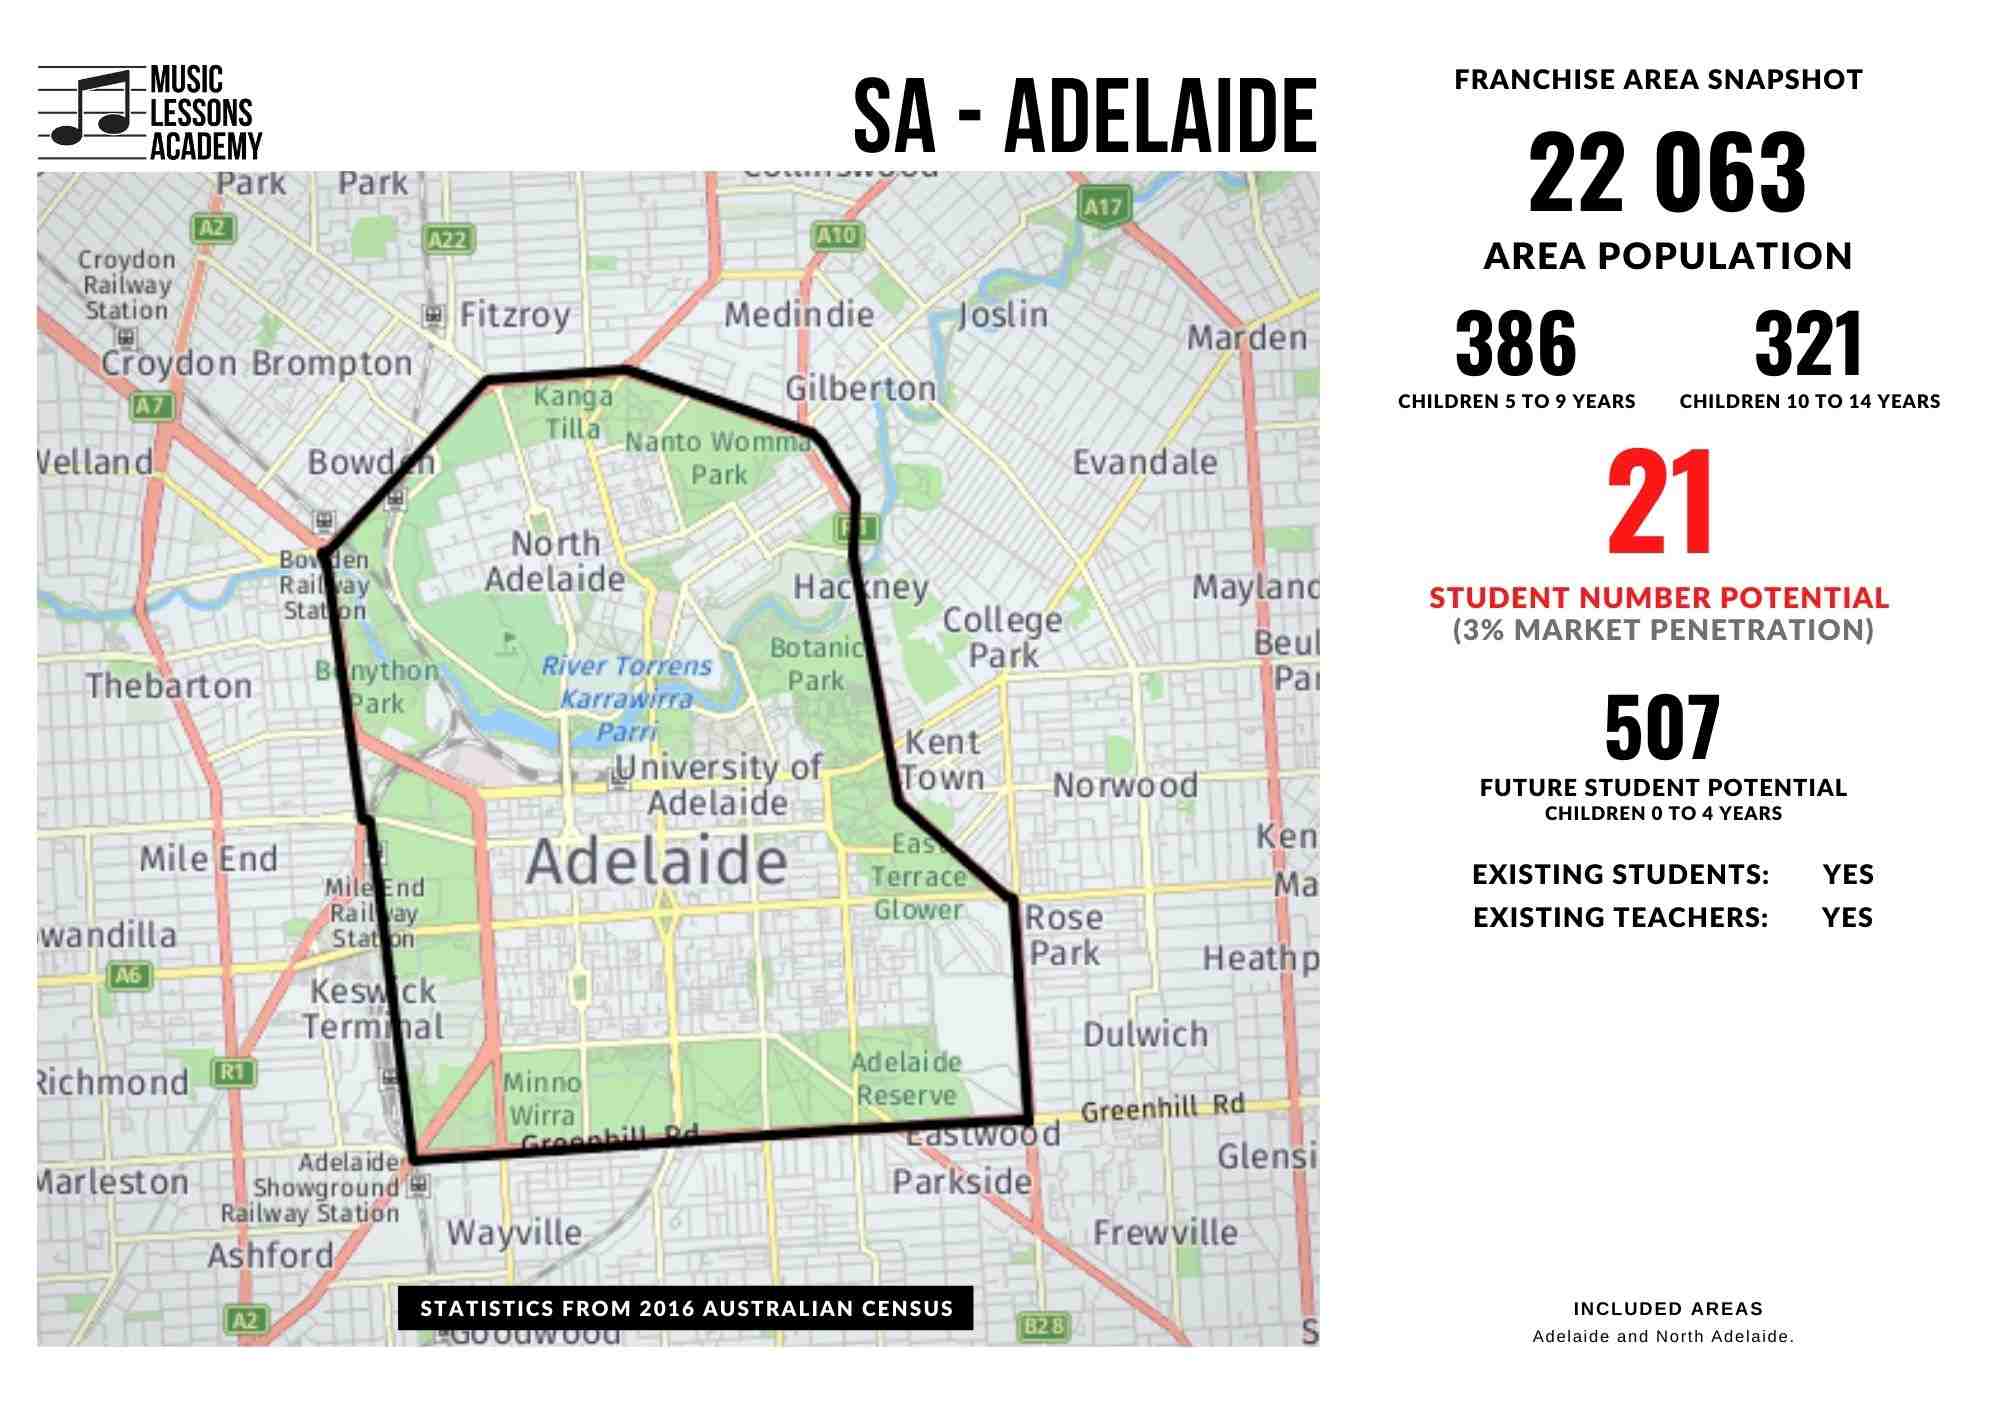 SA Adelaide Franchise for sale